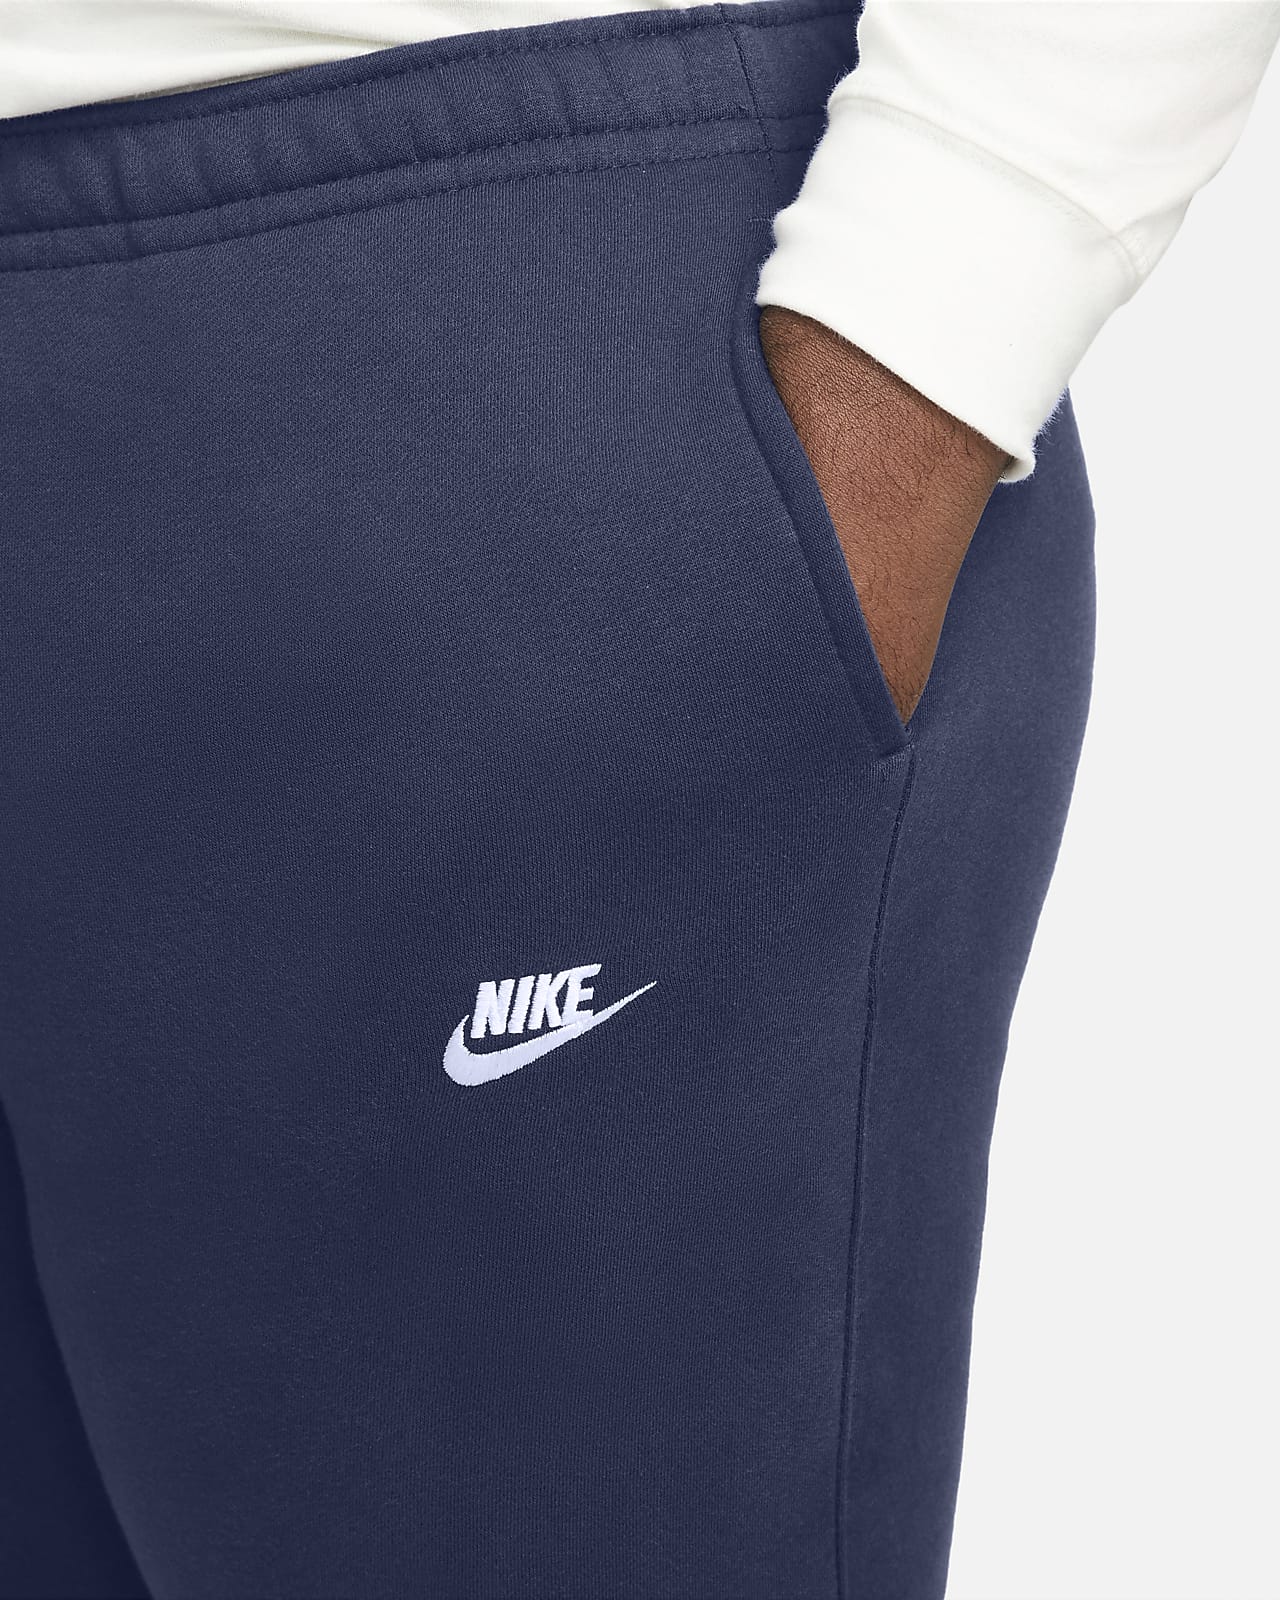 Nike Club Fleece Jogger Pants in Green for Men